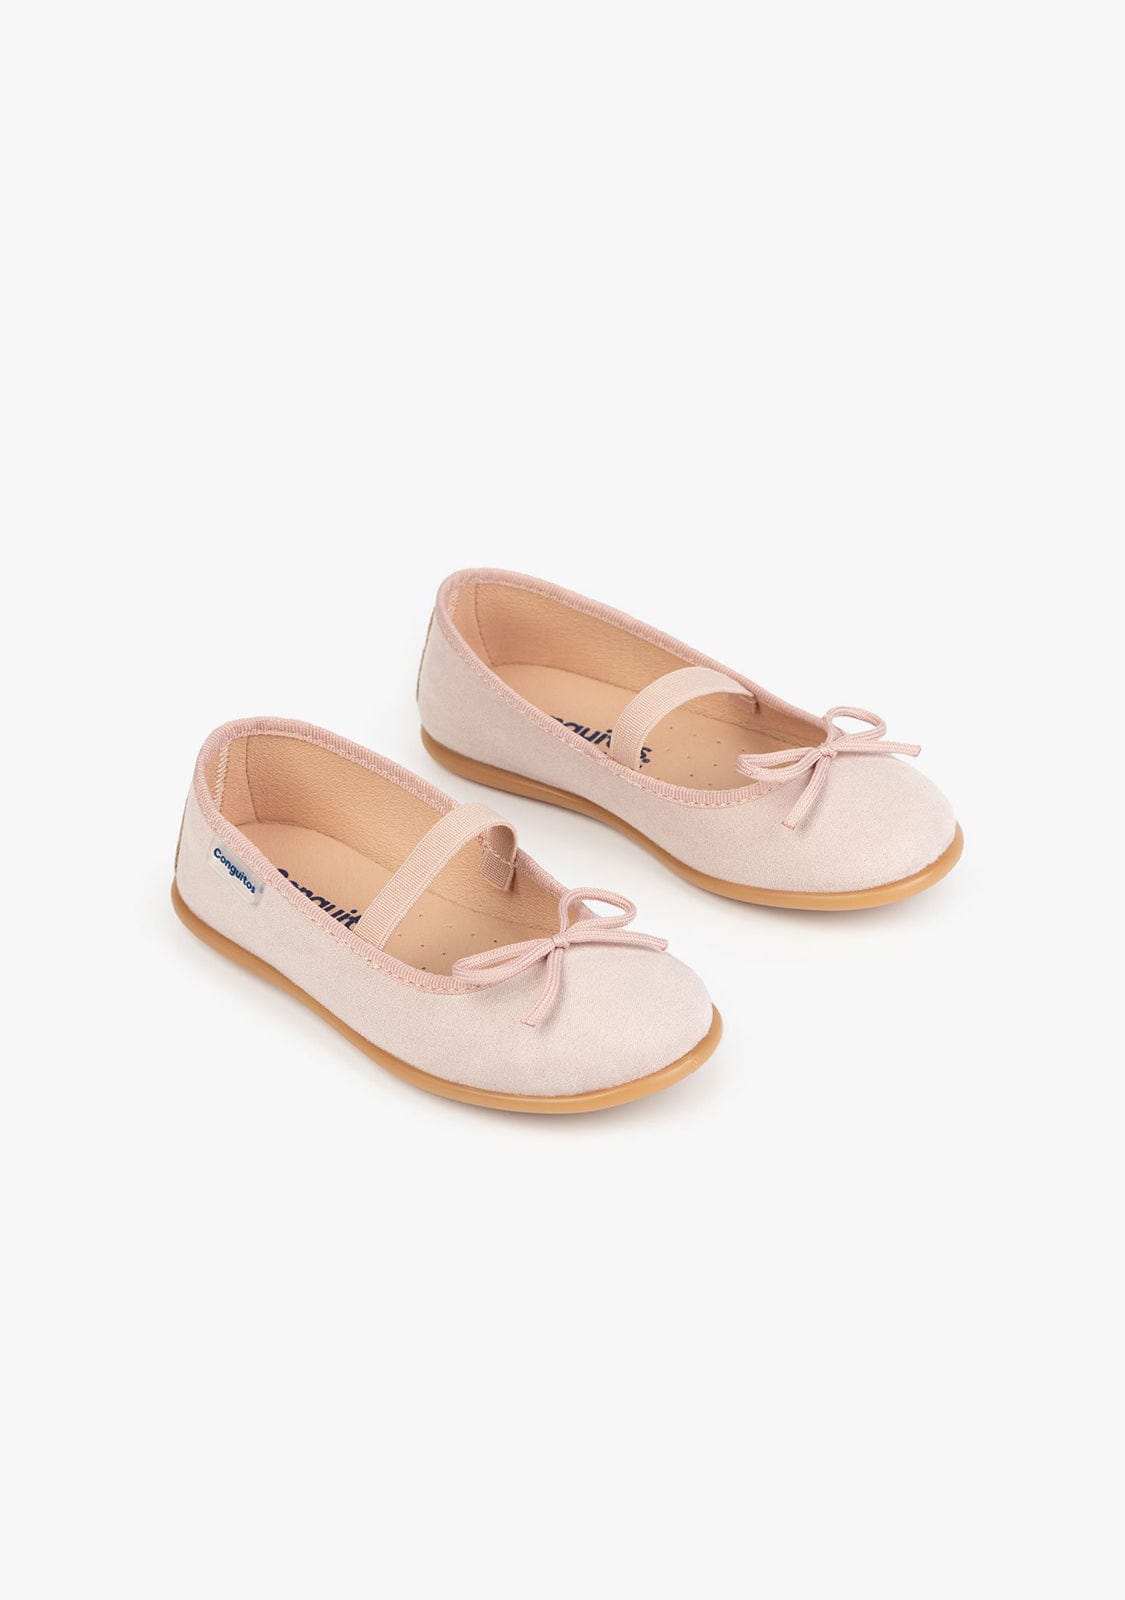 CONGUITOS Shoes Girl’s Pink Basic Ballerinas